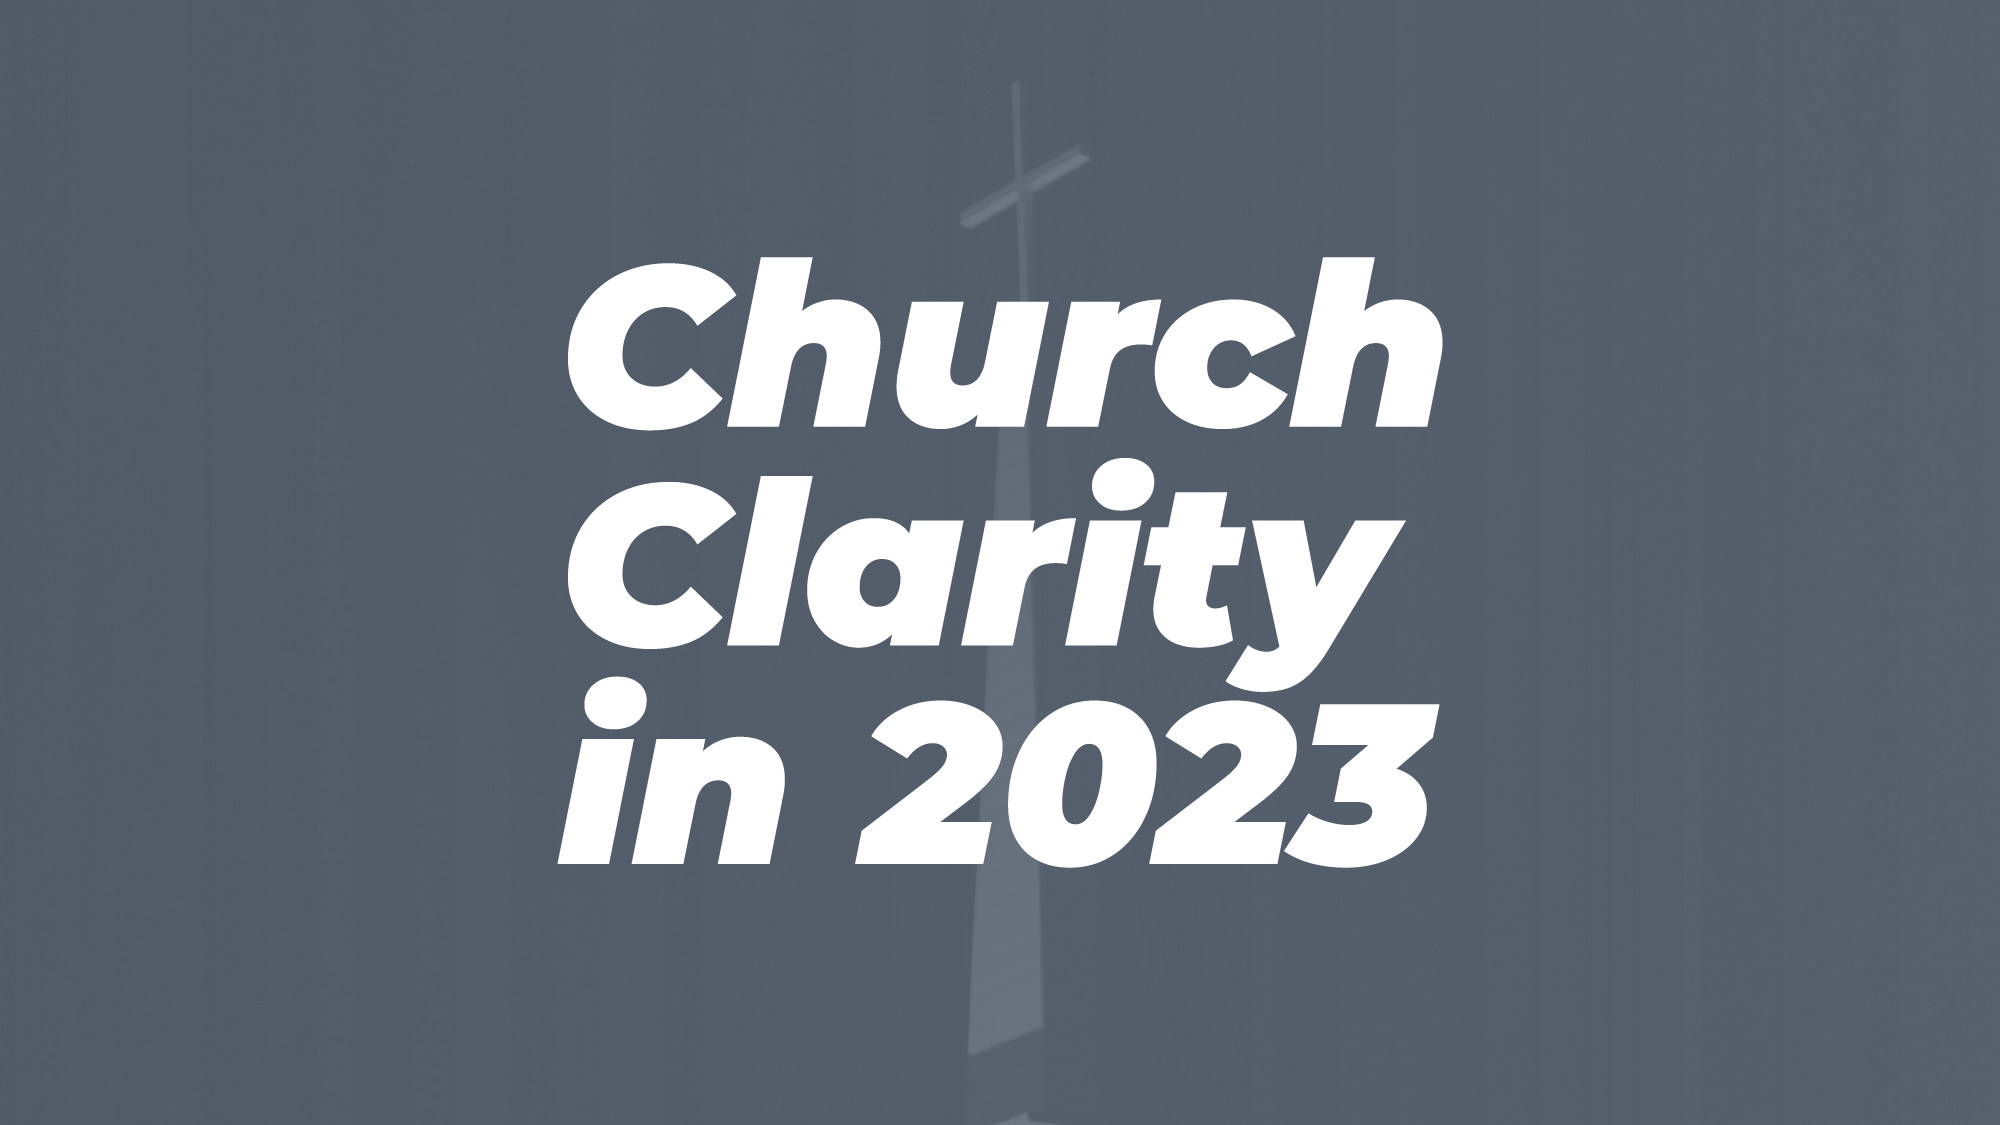 https://5262803.fs1.hubspotusercontent-na1.net/hubfs/5262803/Imported_Blog_Media/Church%20Clarity%20in%202023_______Church%20Clarity%20in%202023_Blog.jpg